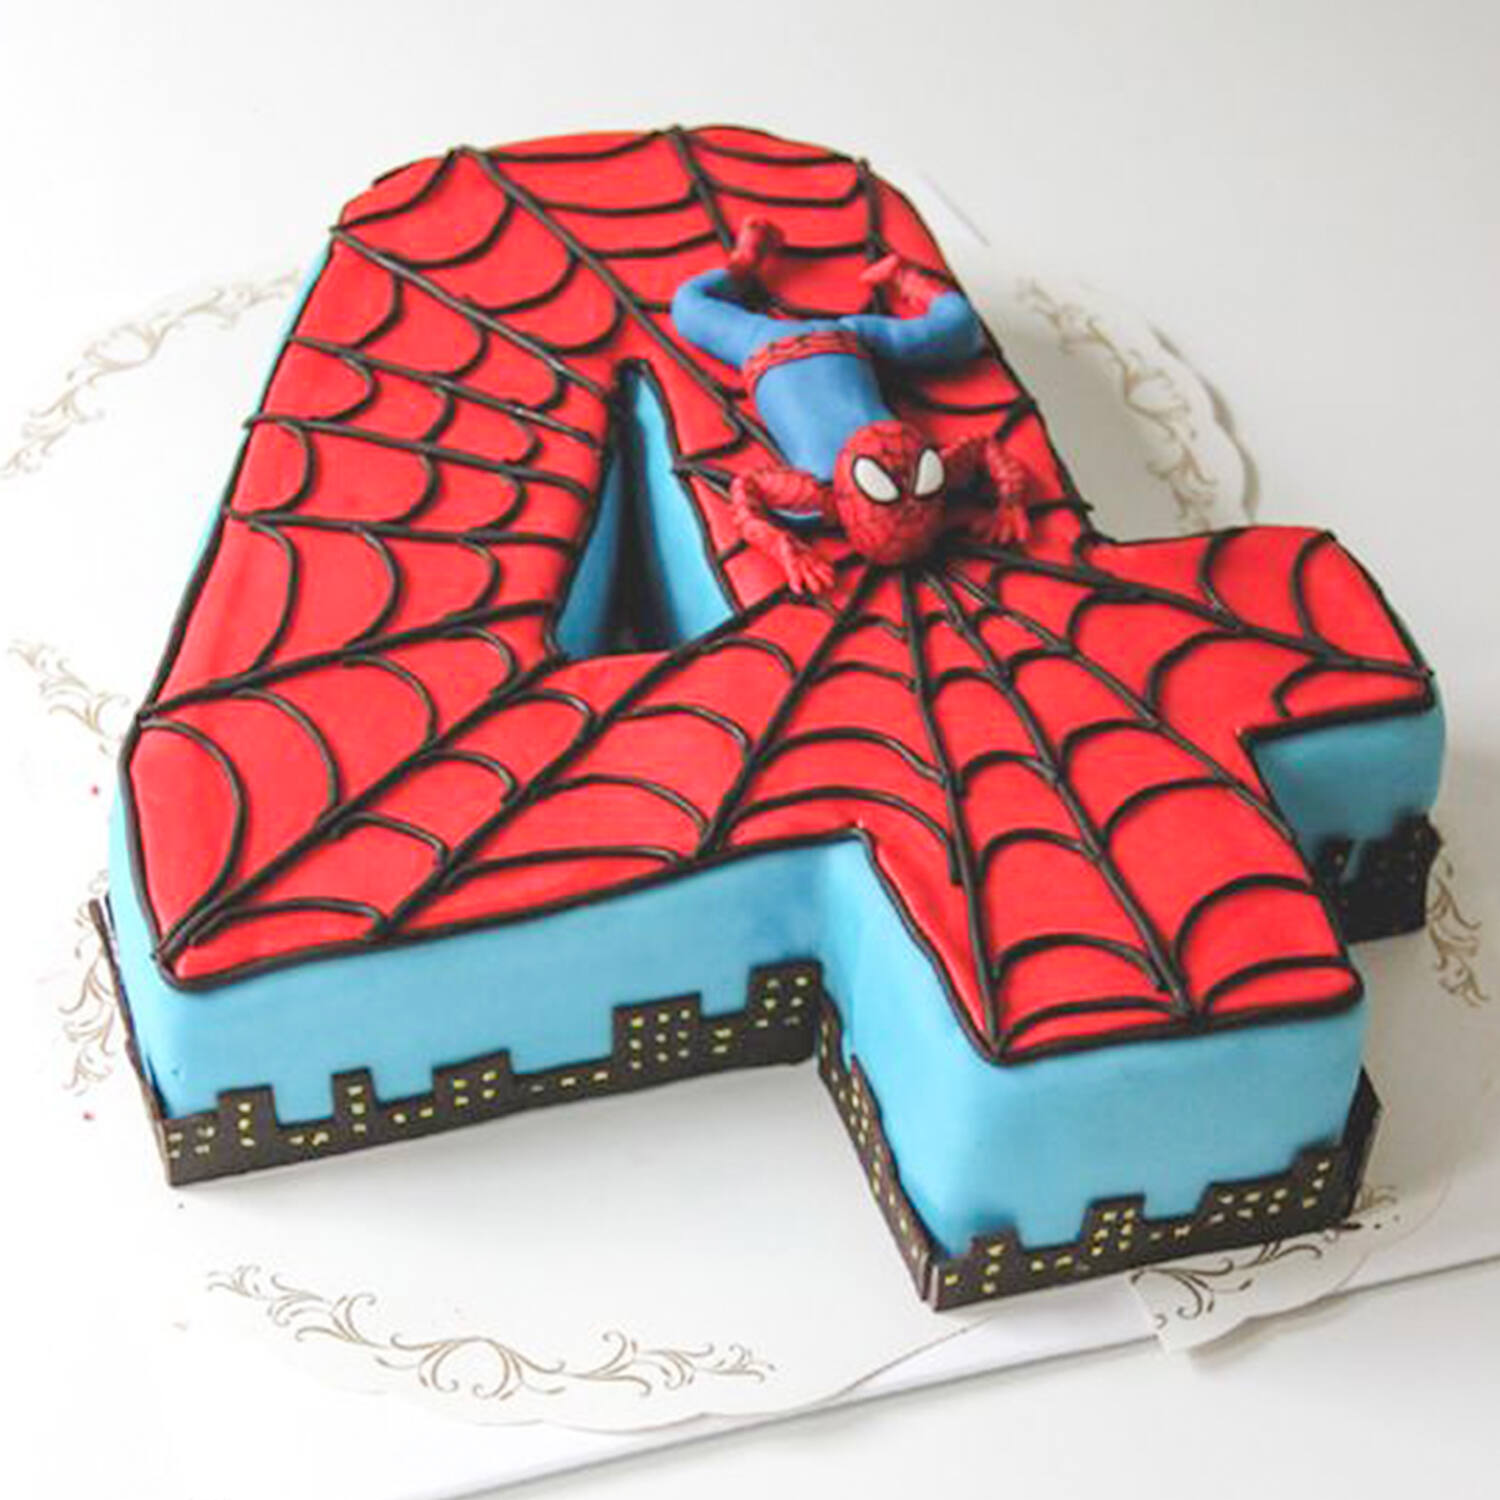 Buy Blissful Spiderman Photo CakeSpiderman Treat